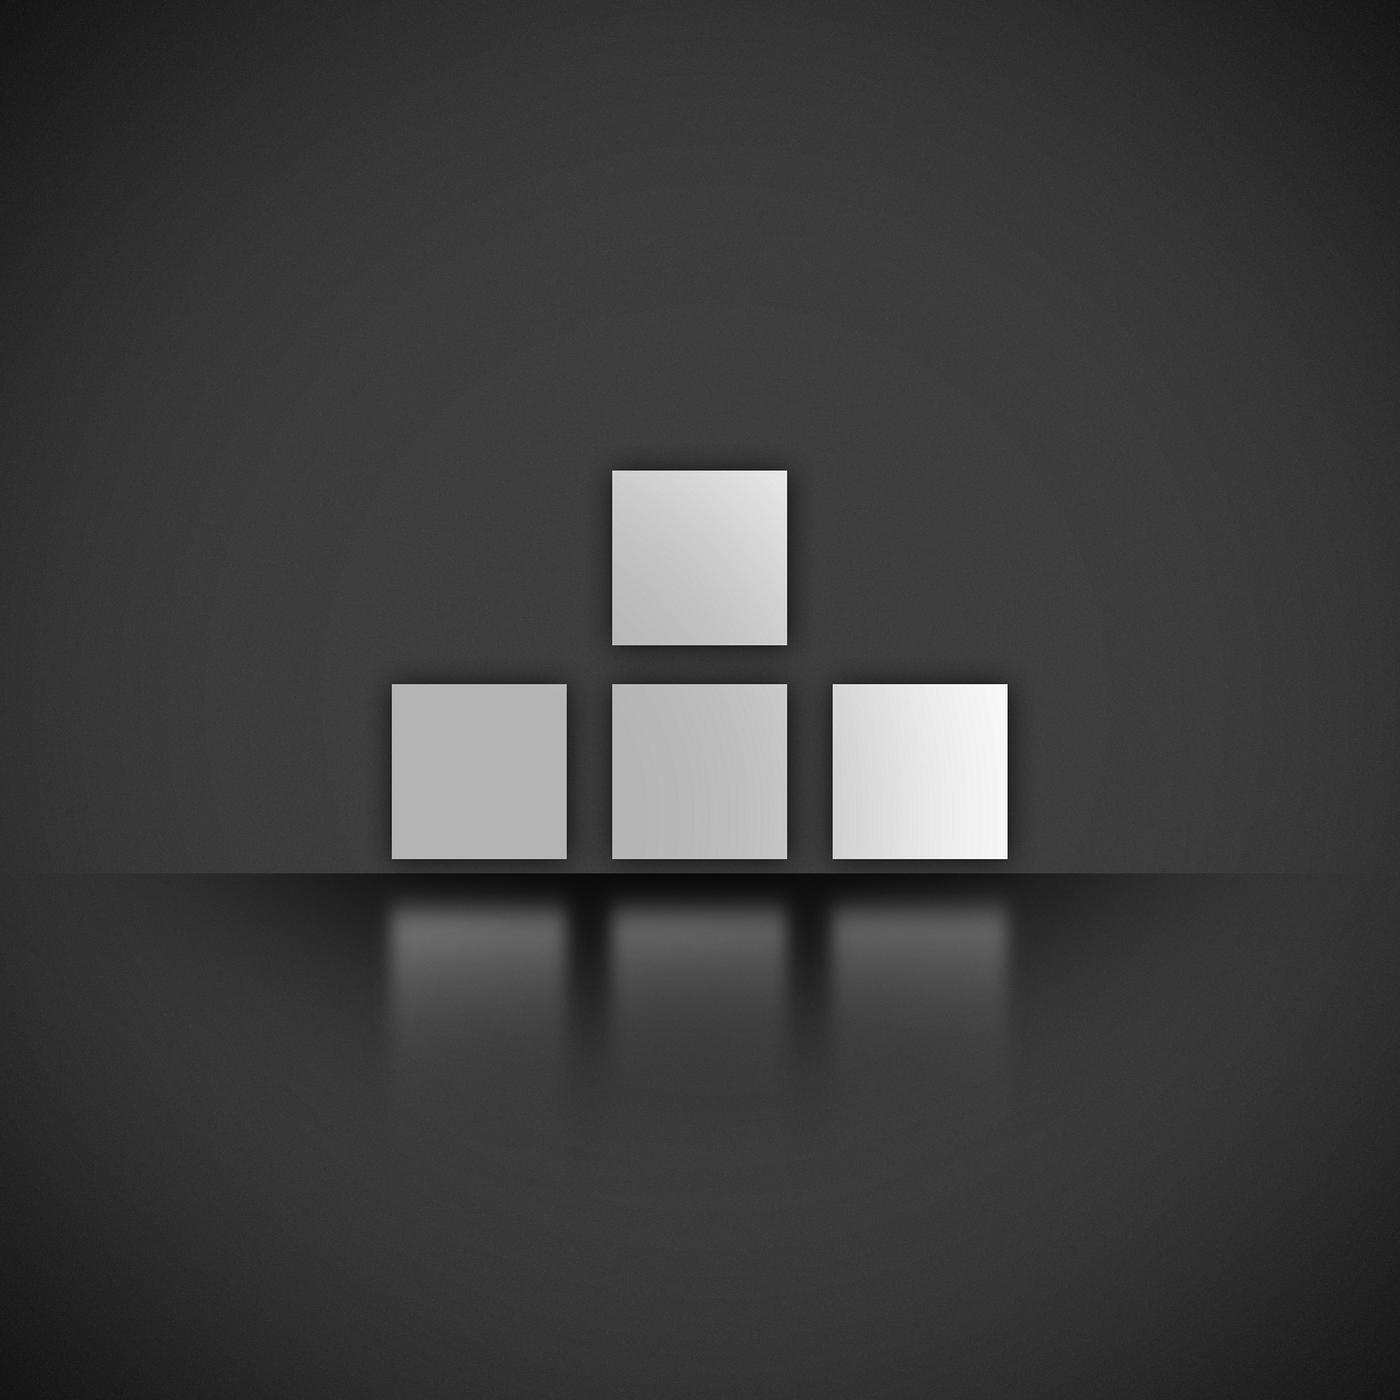 Постер альбома Tetris (Remix)